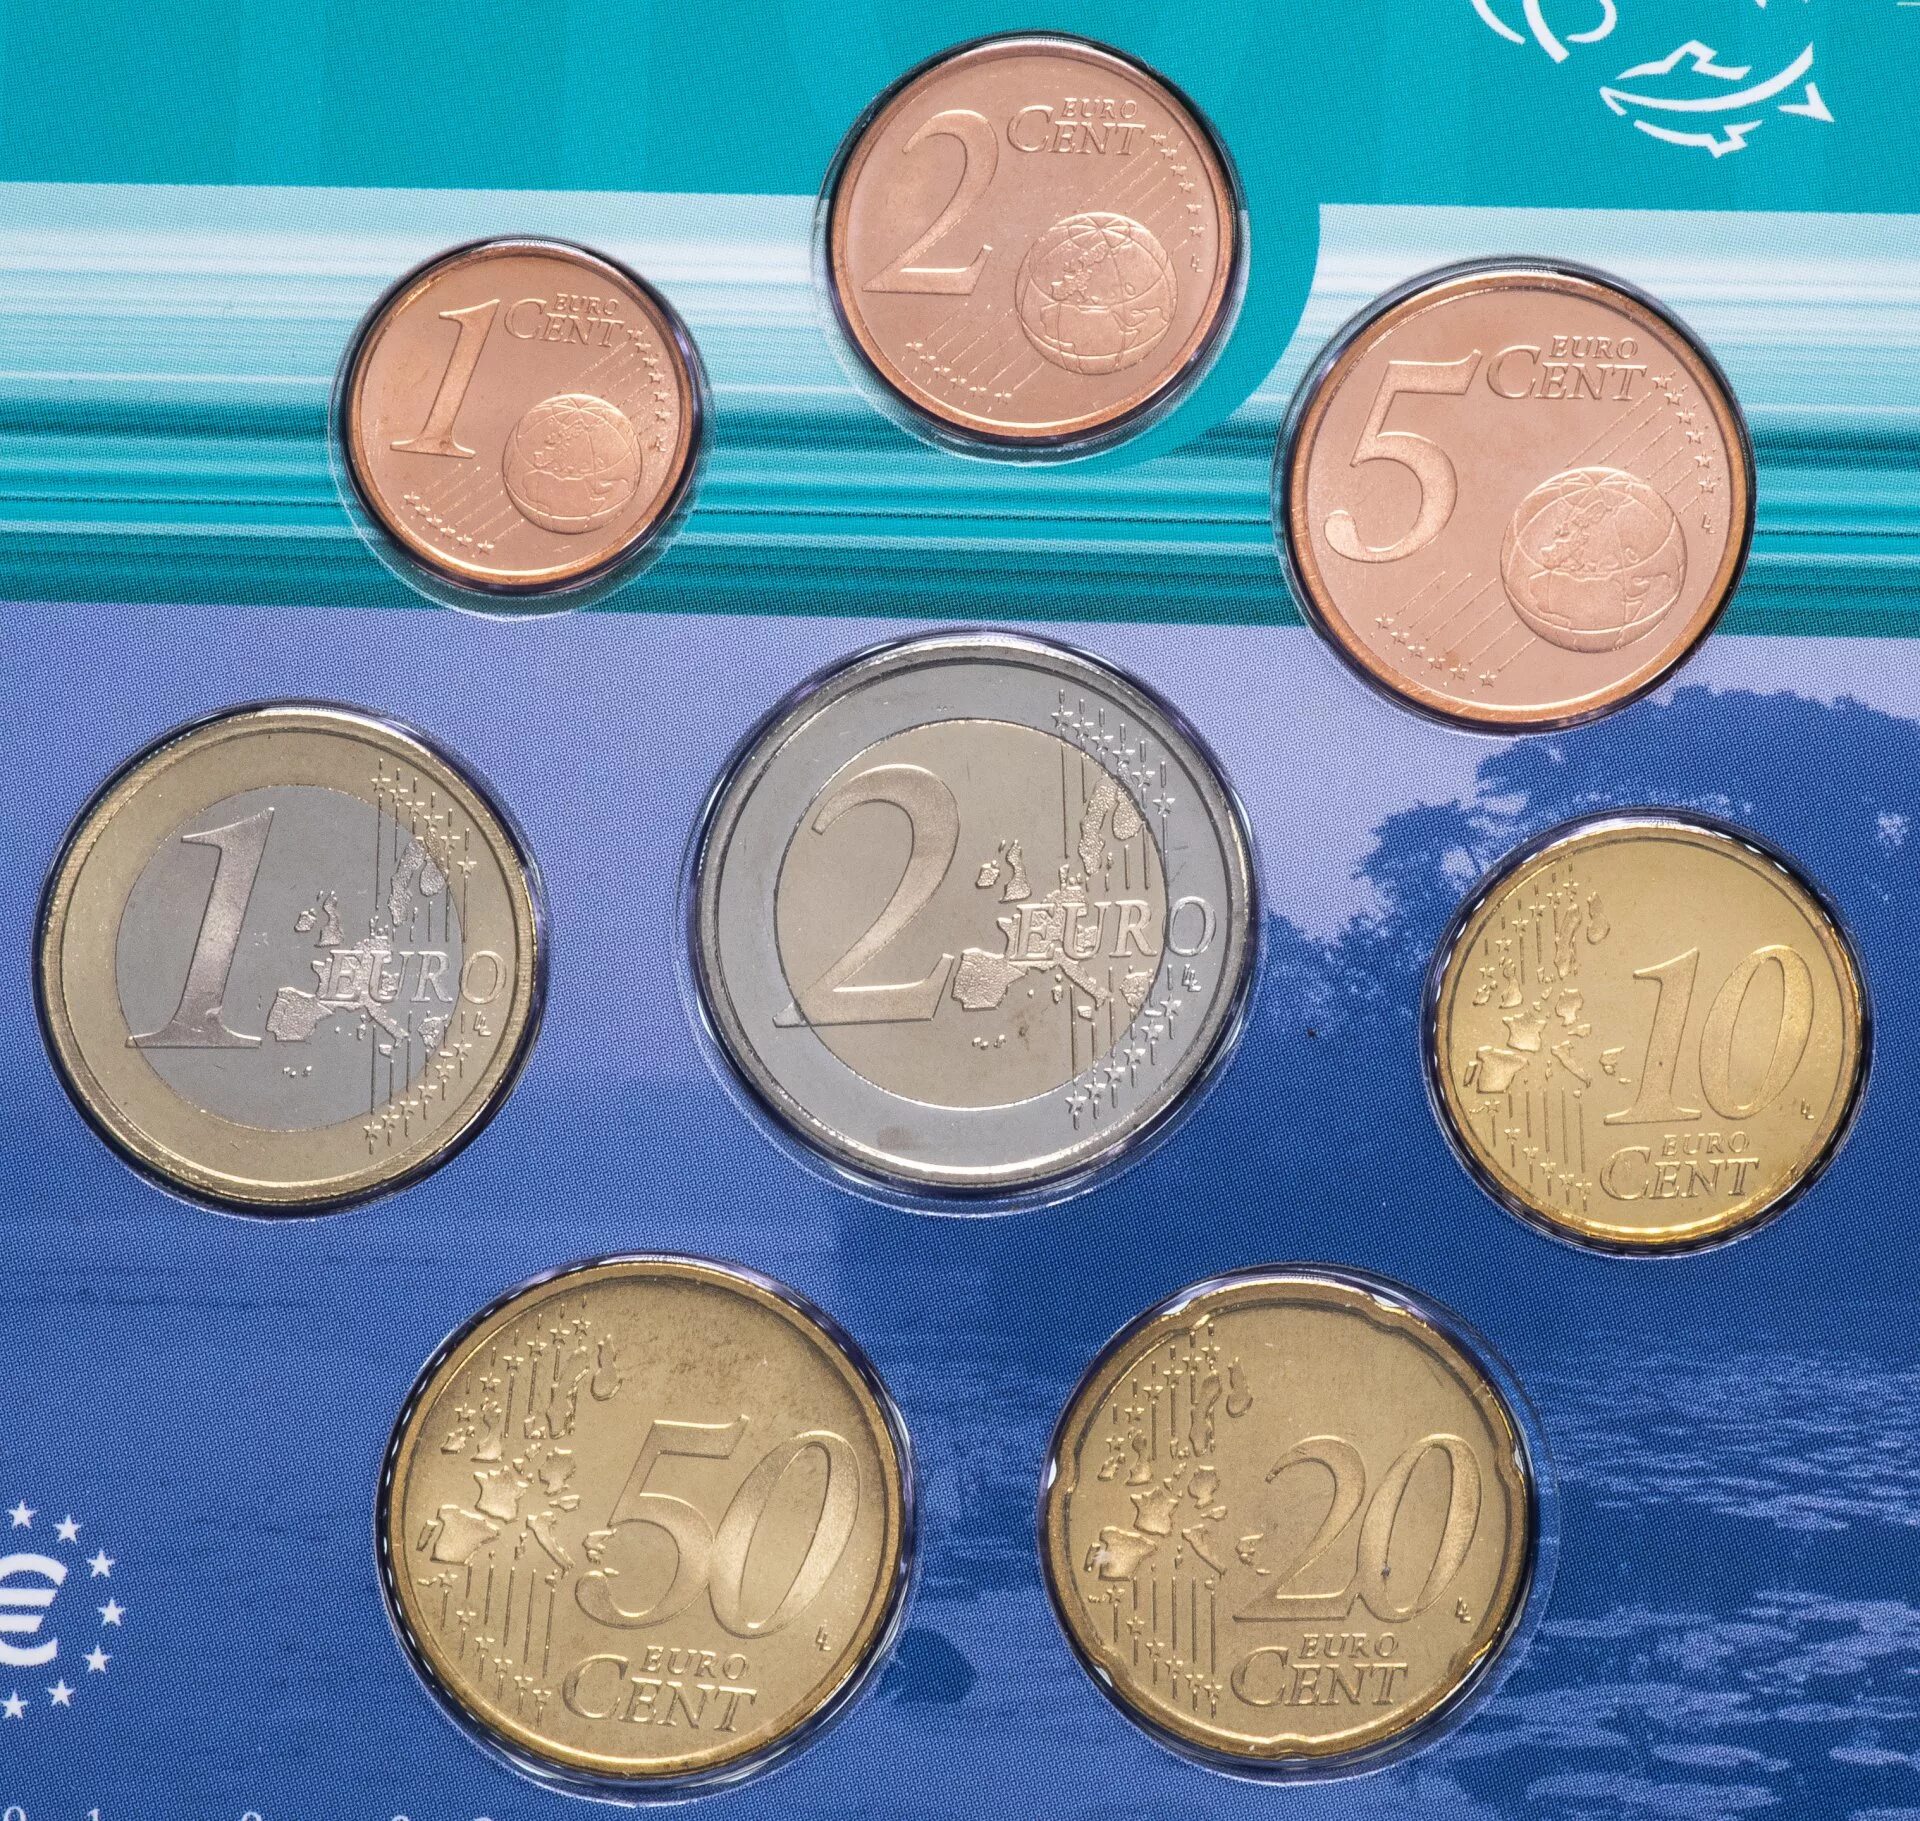 Сколько монет евро. 5 Евро Железный Монетка. Oranjeset набор монет евро Нидерланды 2015. Монеты евро 1 и 2. Коллекция евро монет номиналом 1 евро.